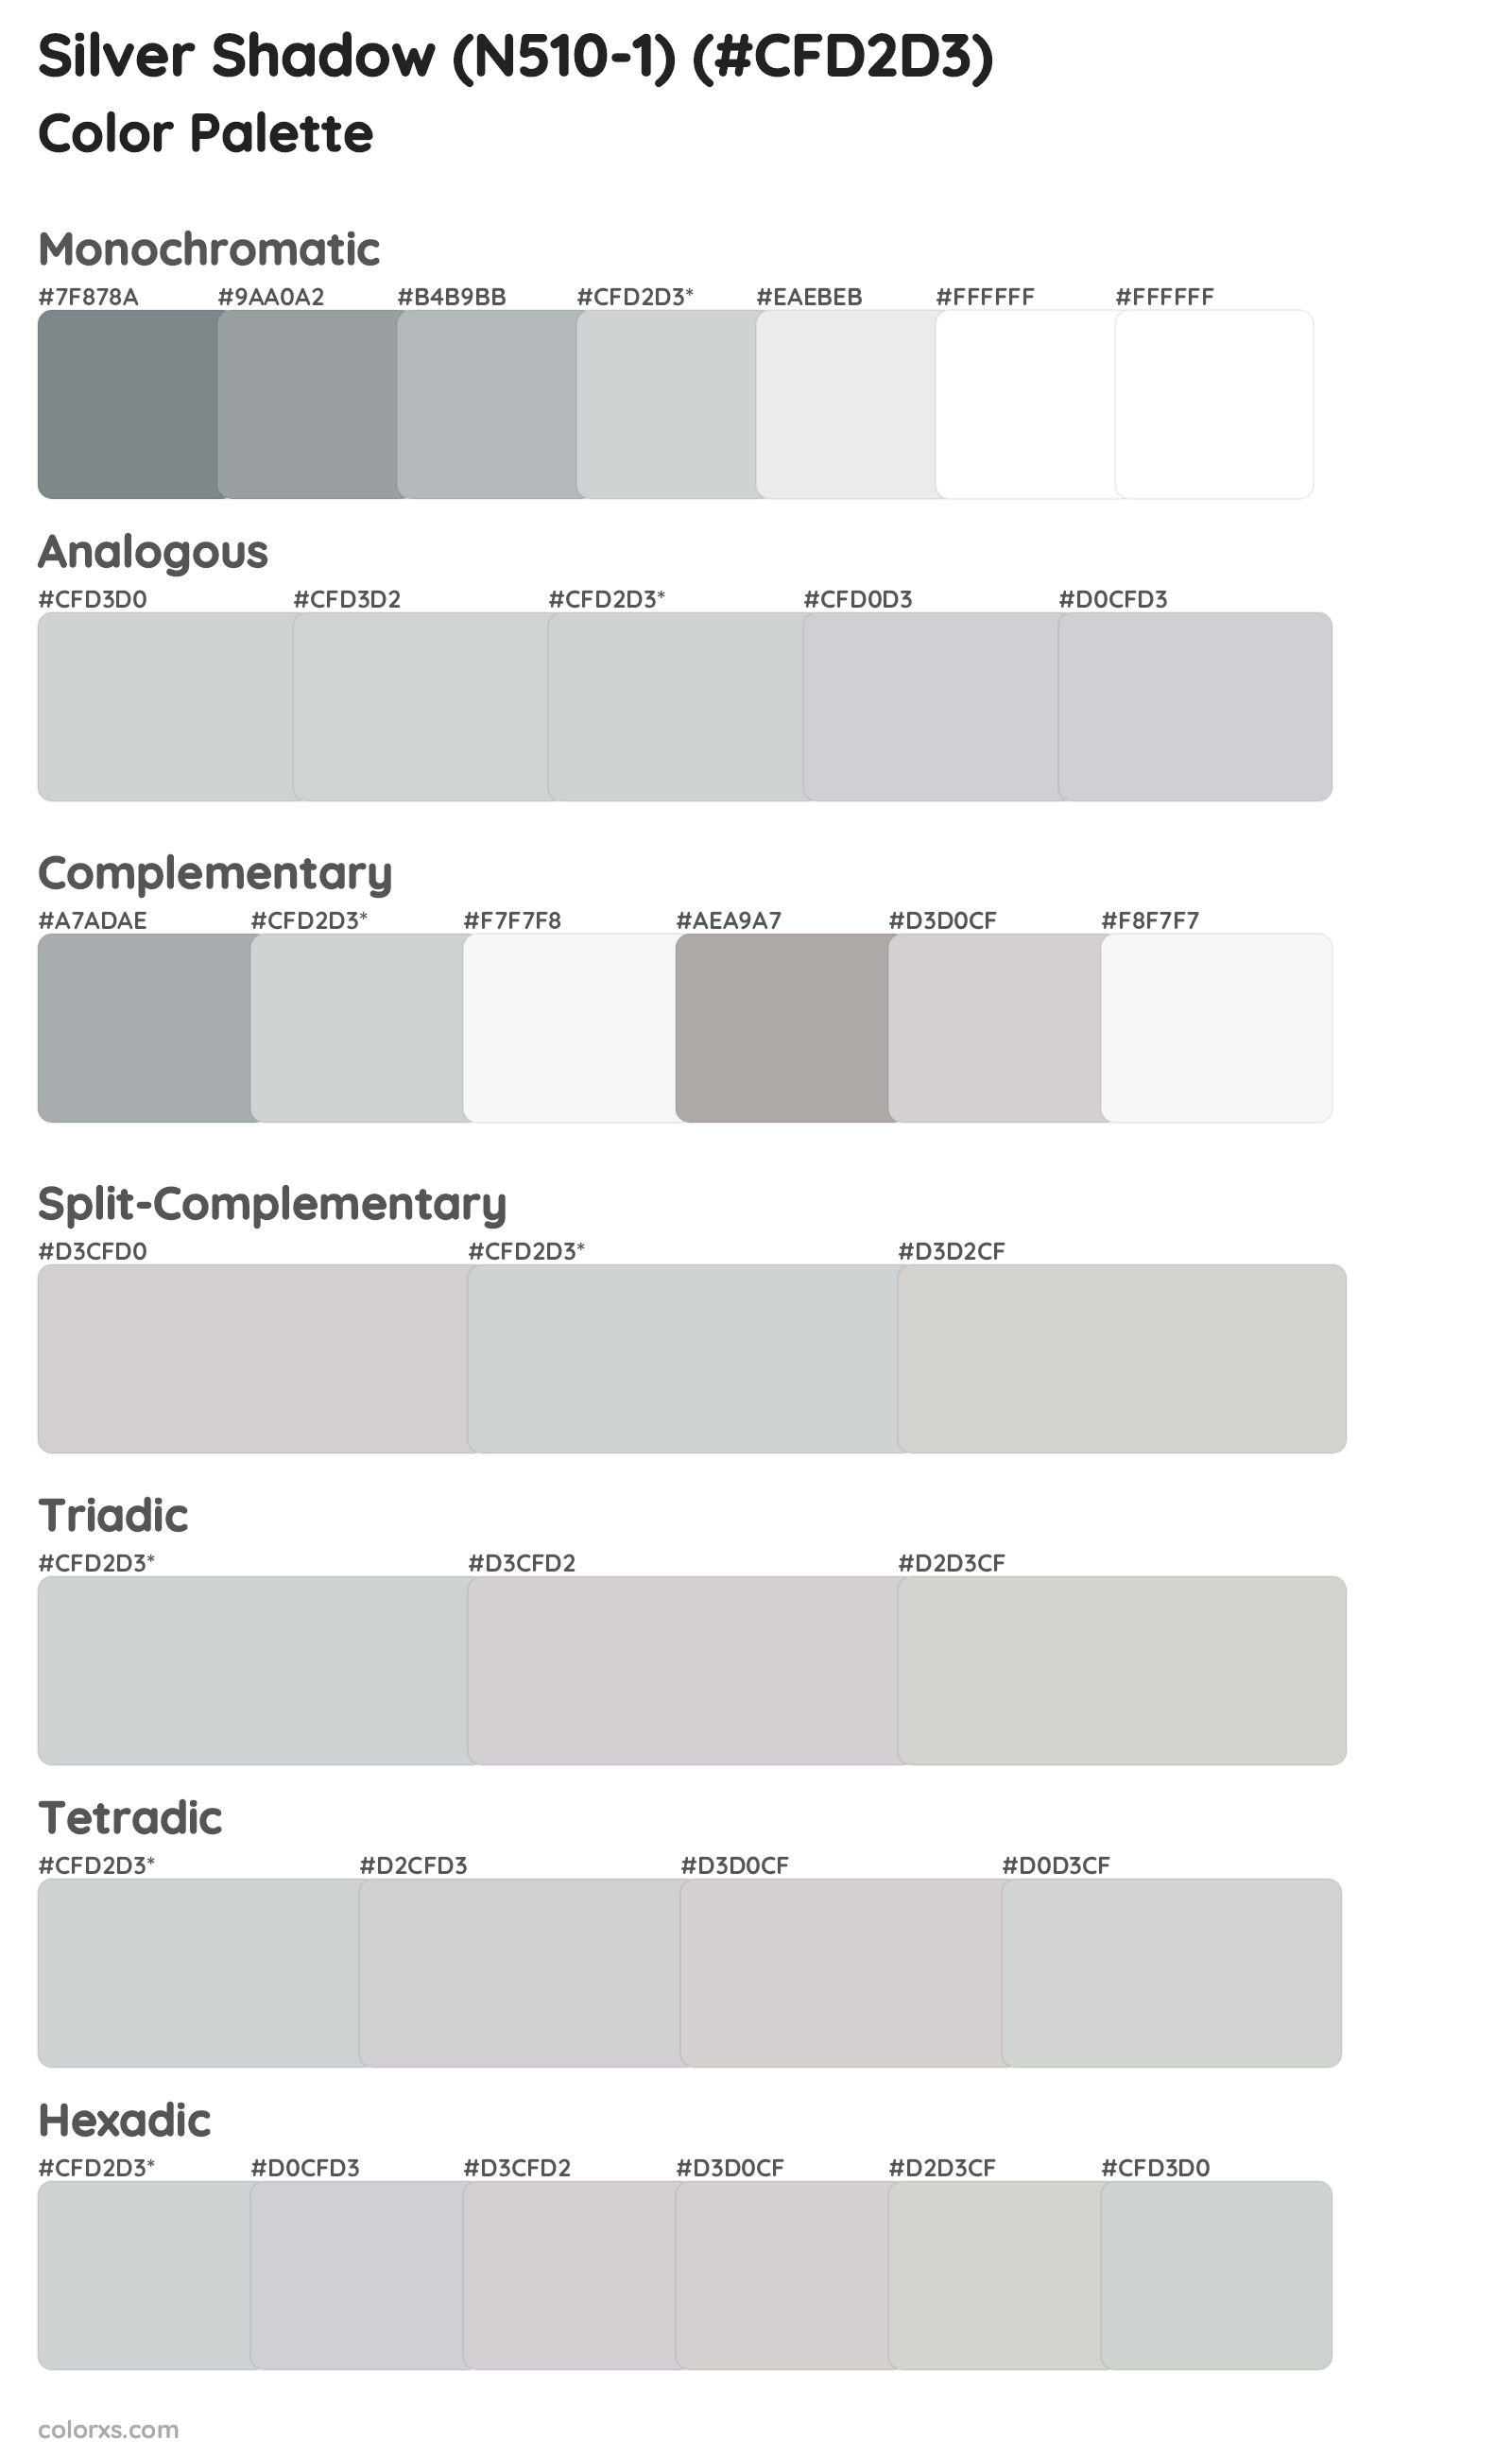 Silver Shadow (N510-1) Color Scheme Palettes